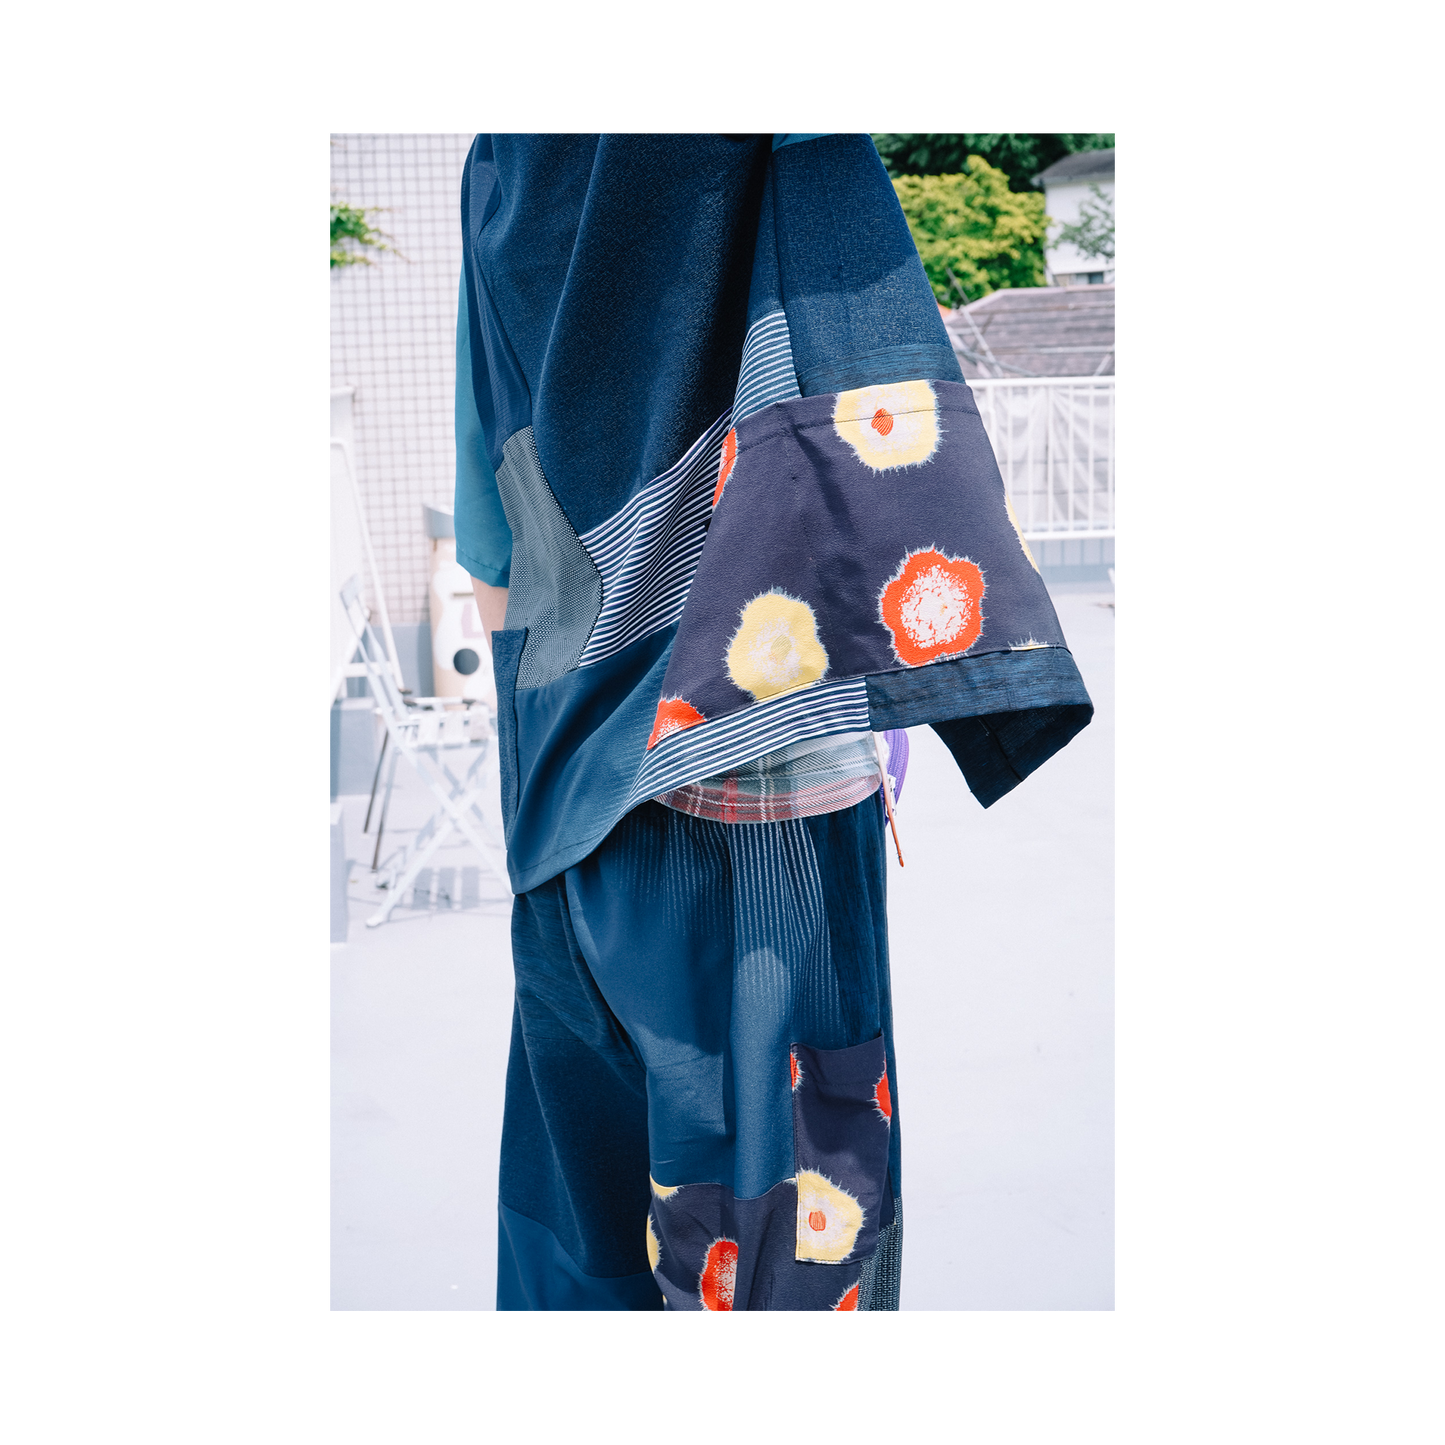 Kimono Working Shirts - Blue 02 L